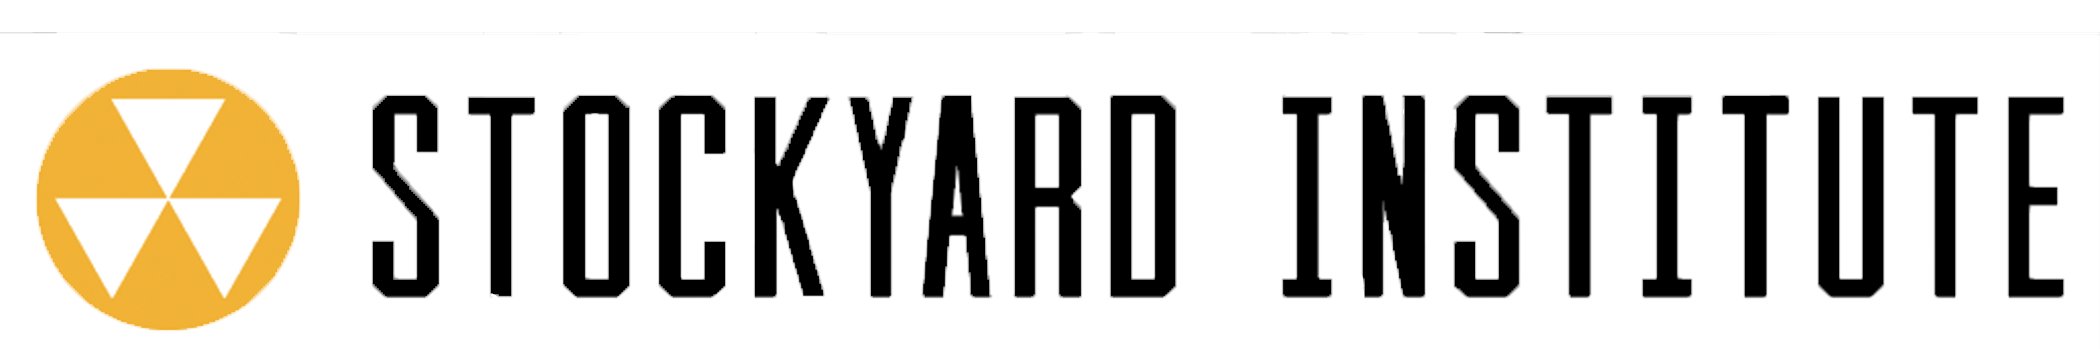 Stockyard Institute Logo